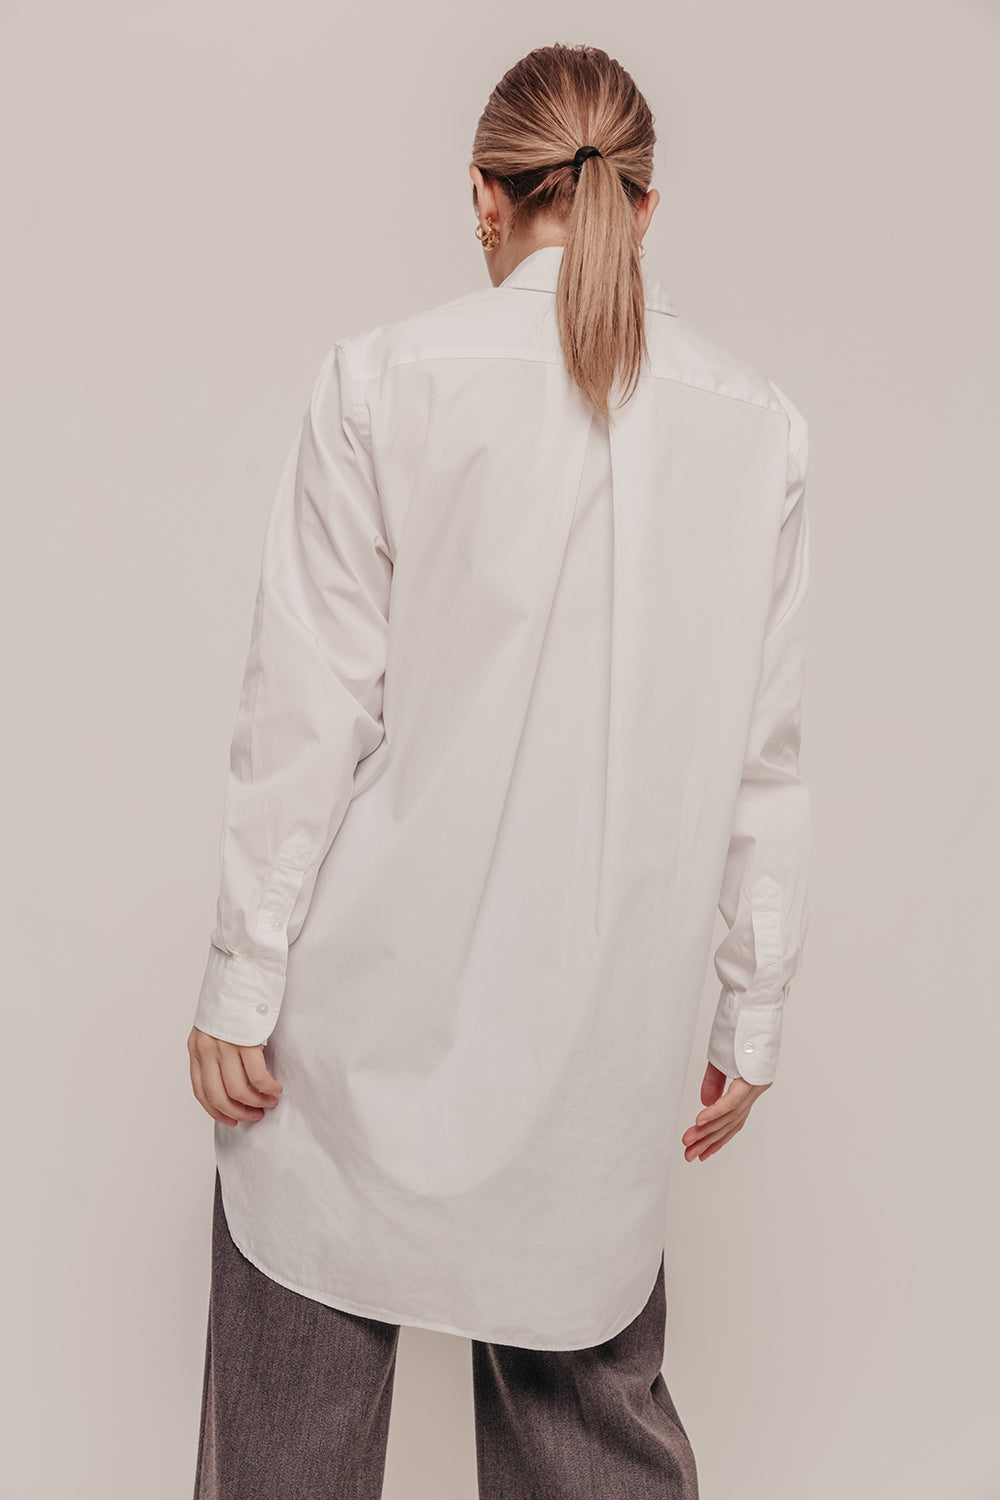 Ralph Lauren Classic White Shirt Size 8-10